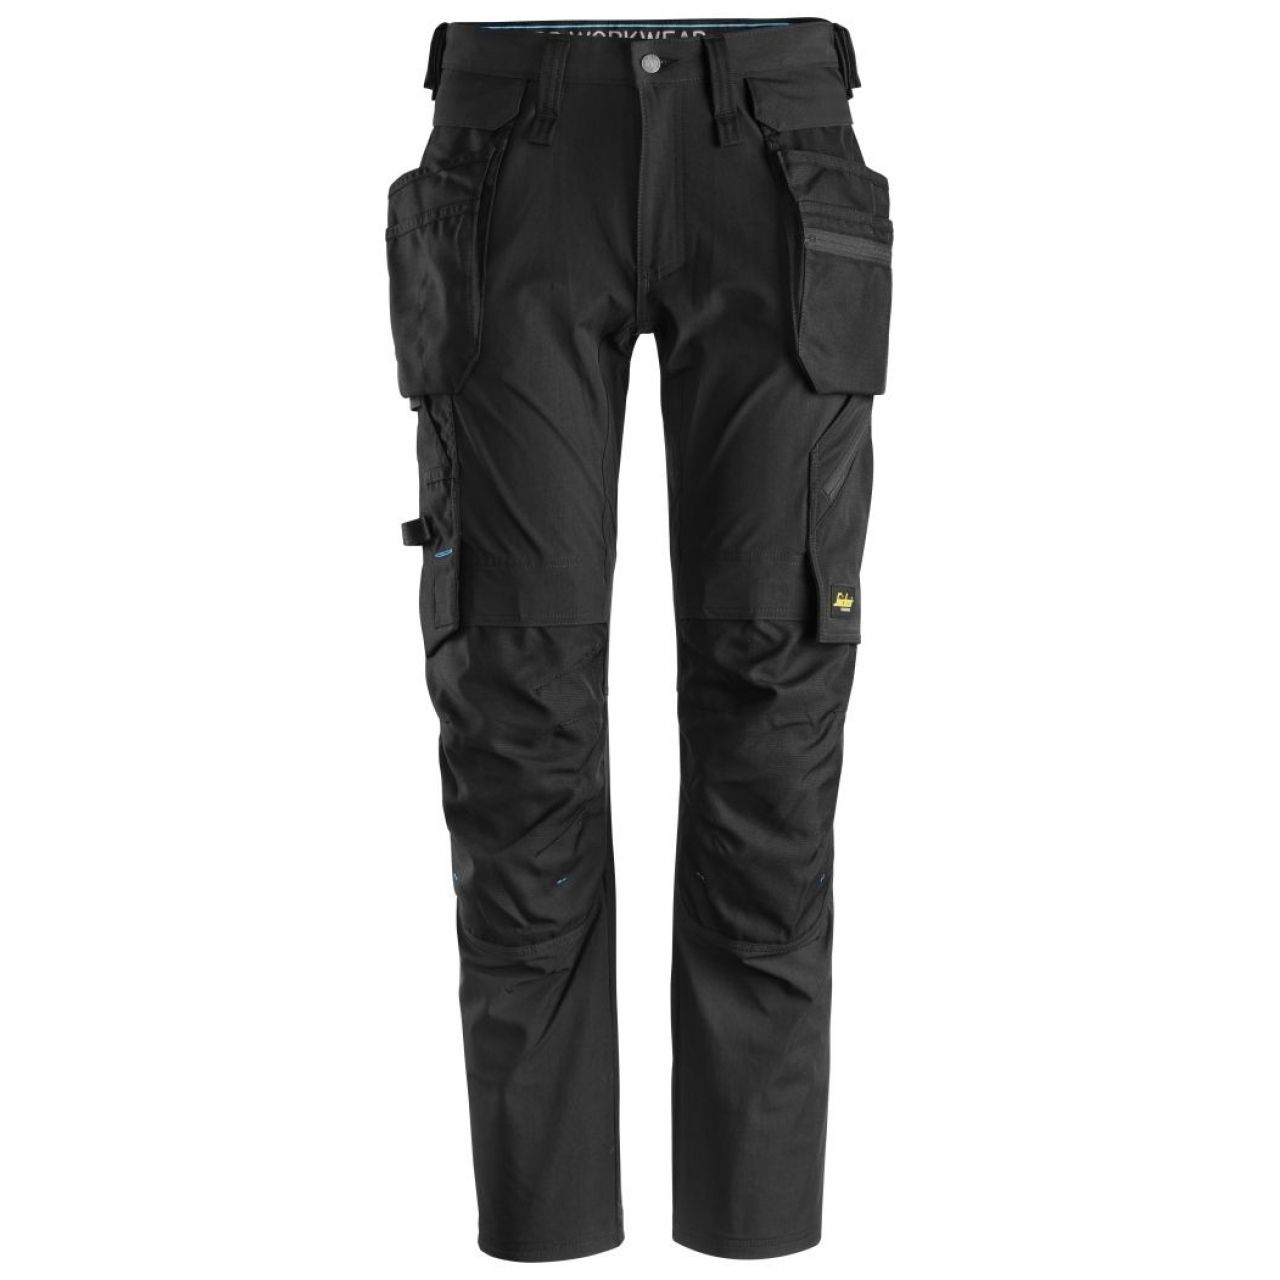 Pantalon + bolsillos flotantes desmontables LiteWork negro talla 108